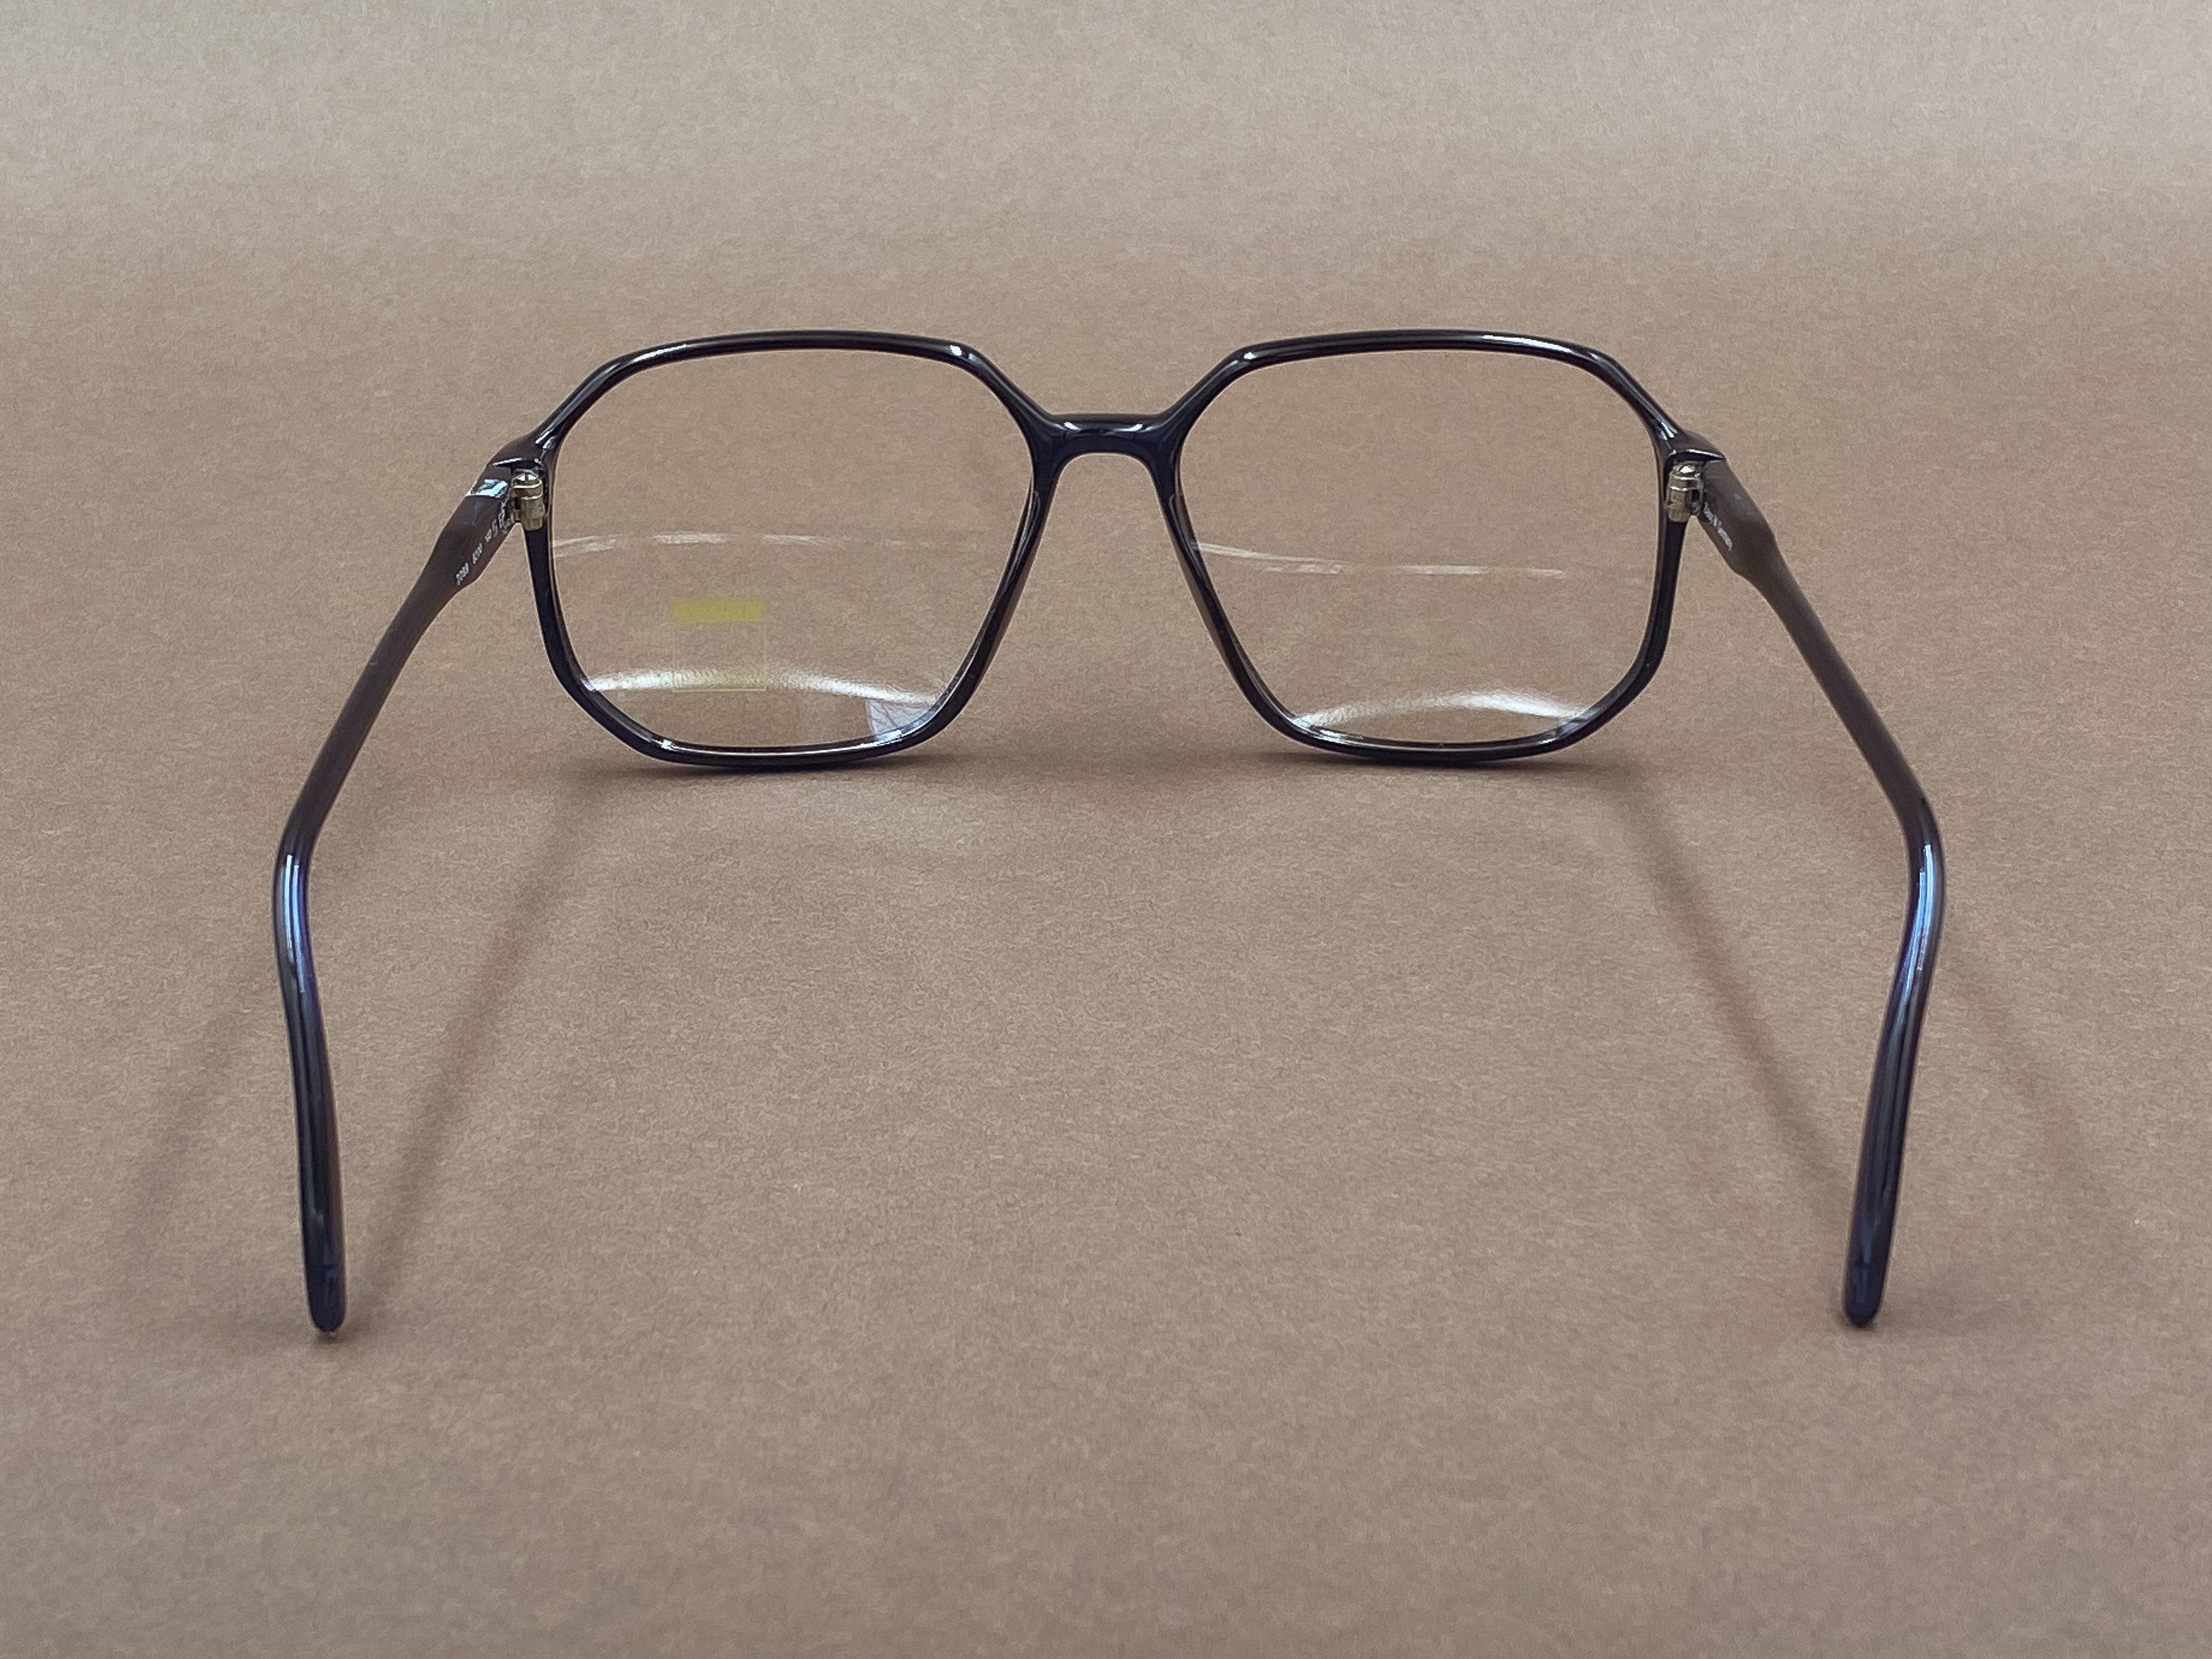 Zeiss 2088 eyeglasses